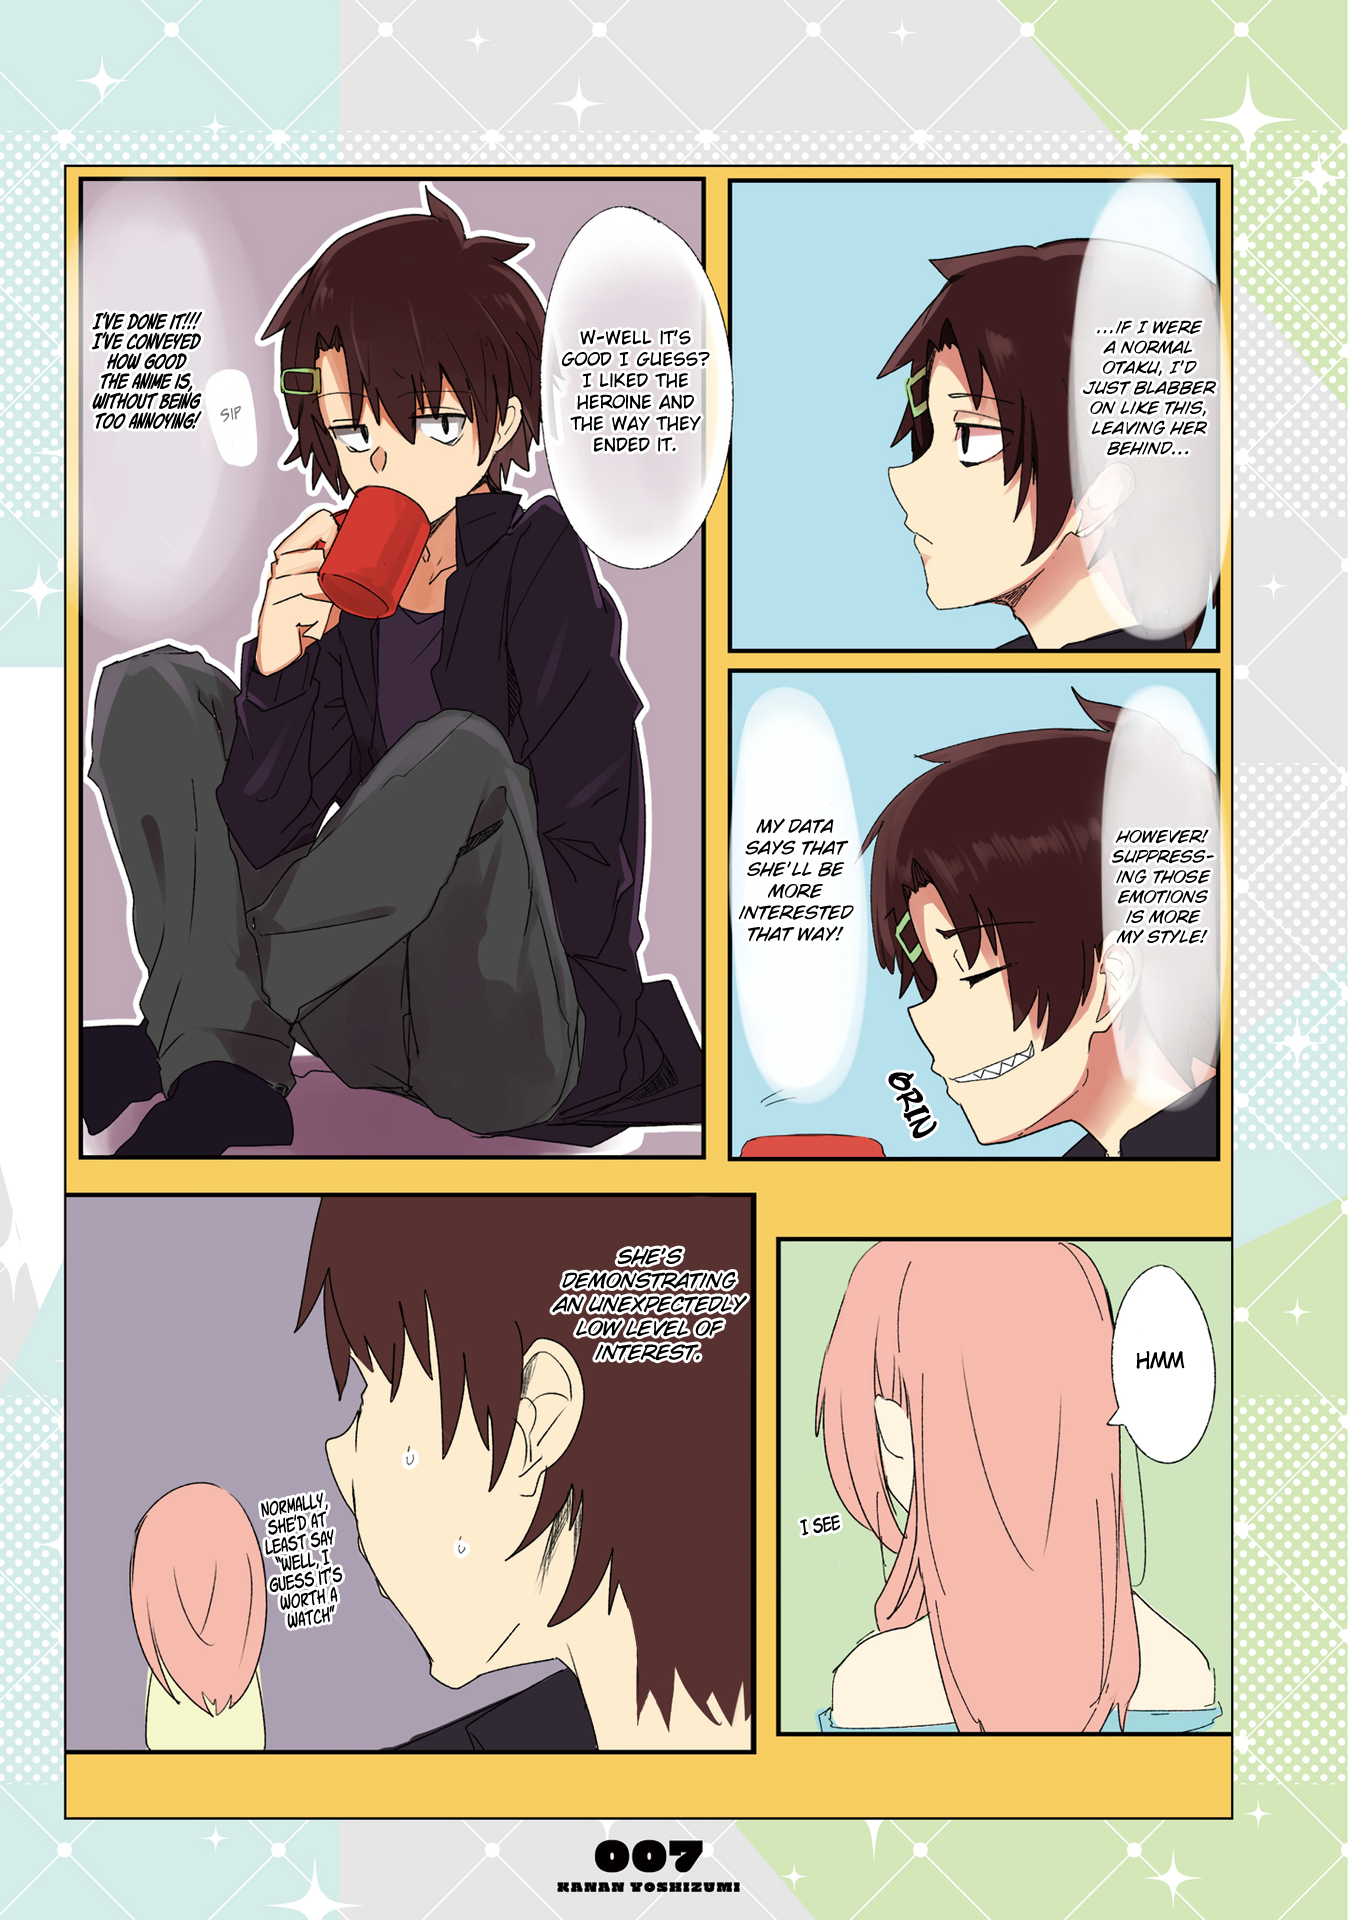 Mousou Timeline Vol.1 Chapter 1.1: Otaku Guy and Non-Otaku Girl 1